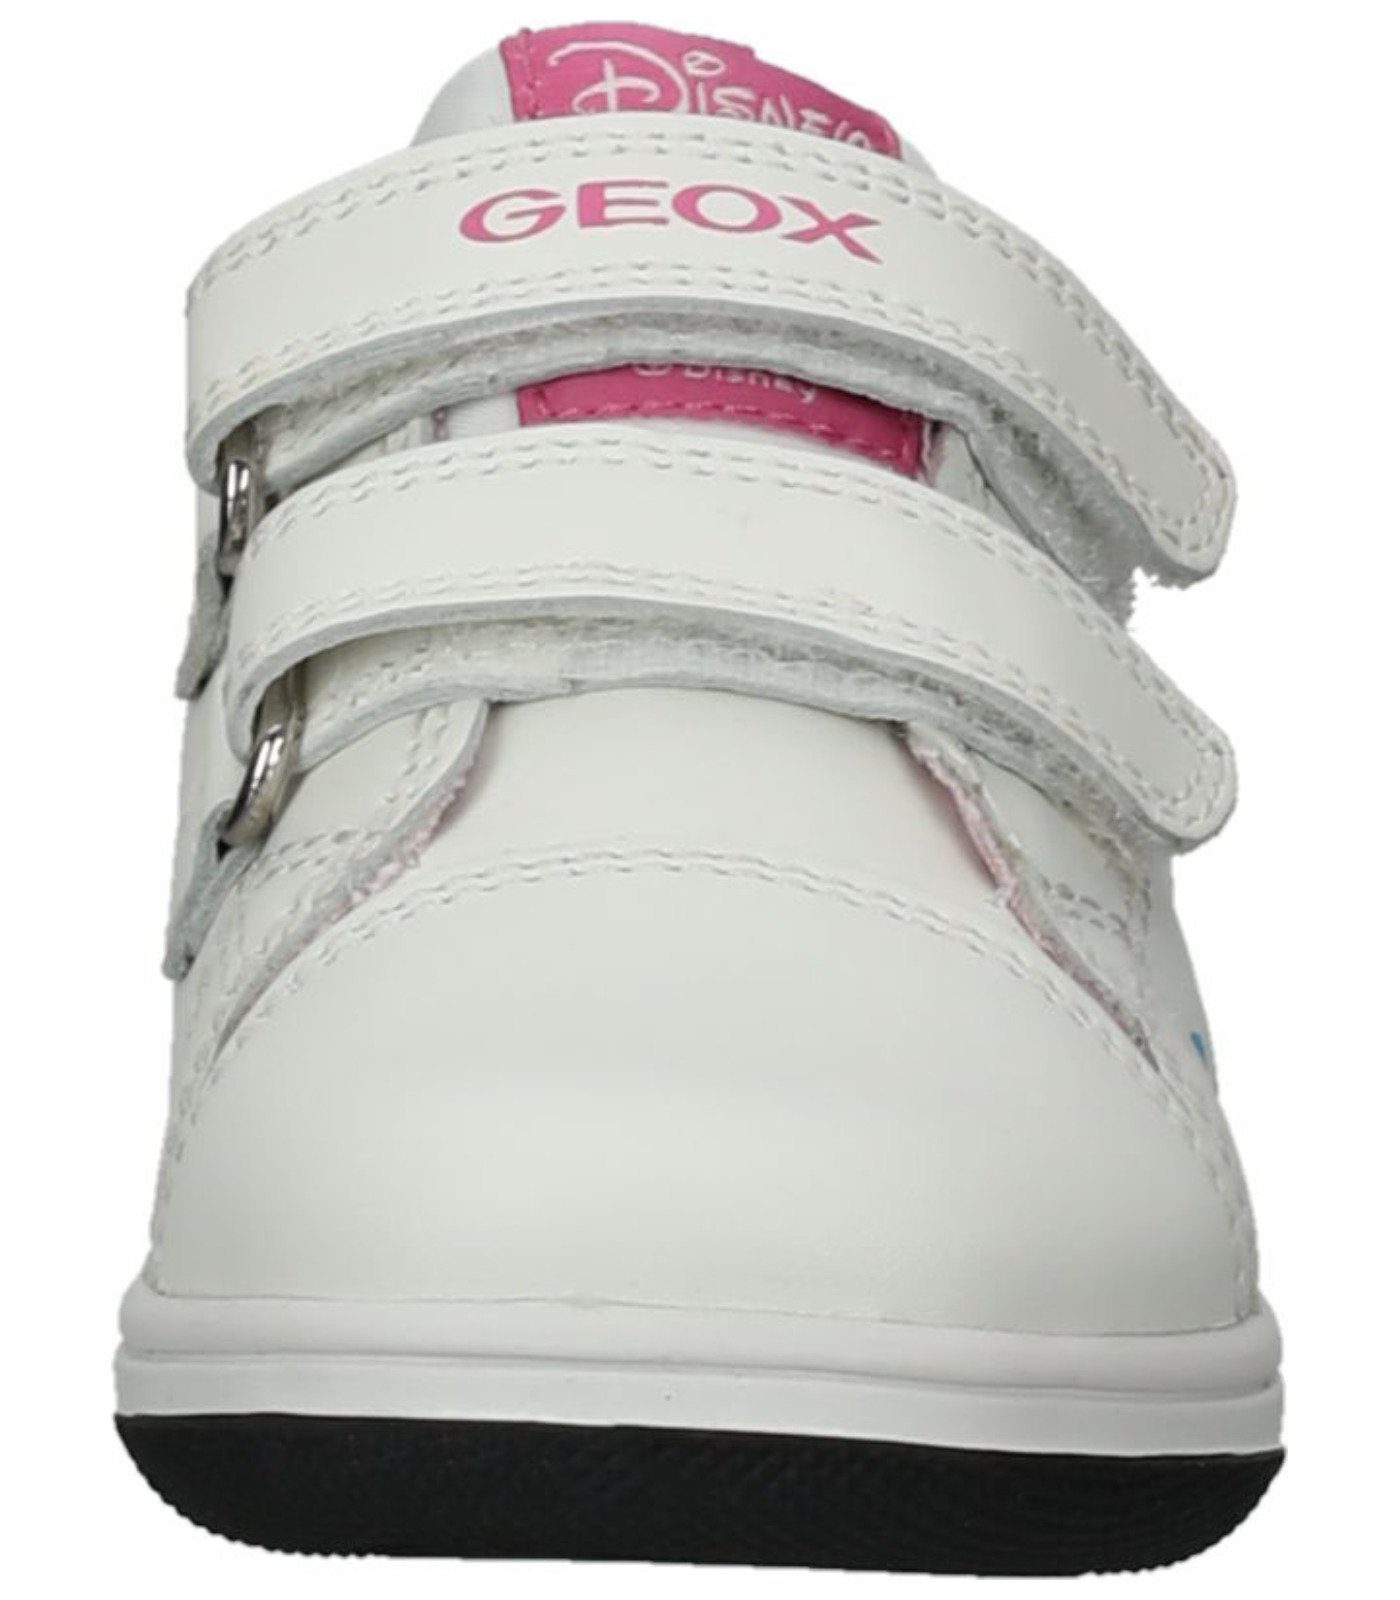 Geox Sneaker Leder/Textil Sneaker Schwarz Weiß